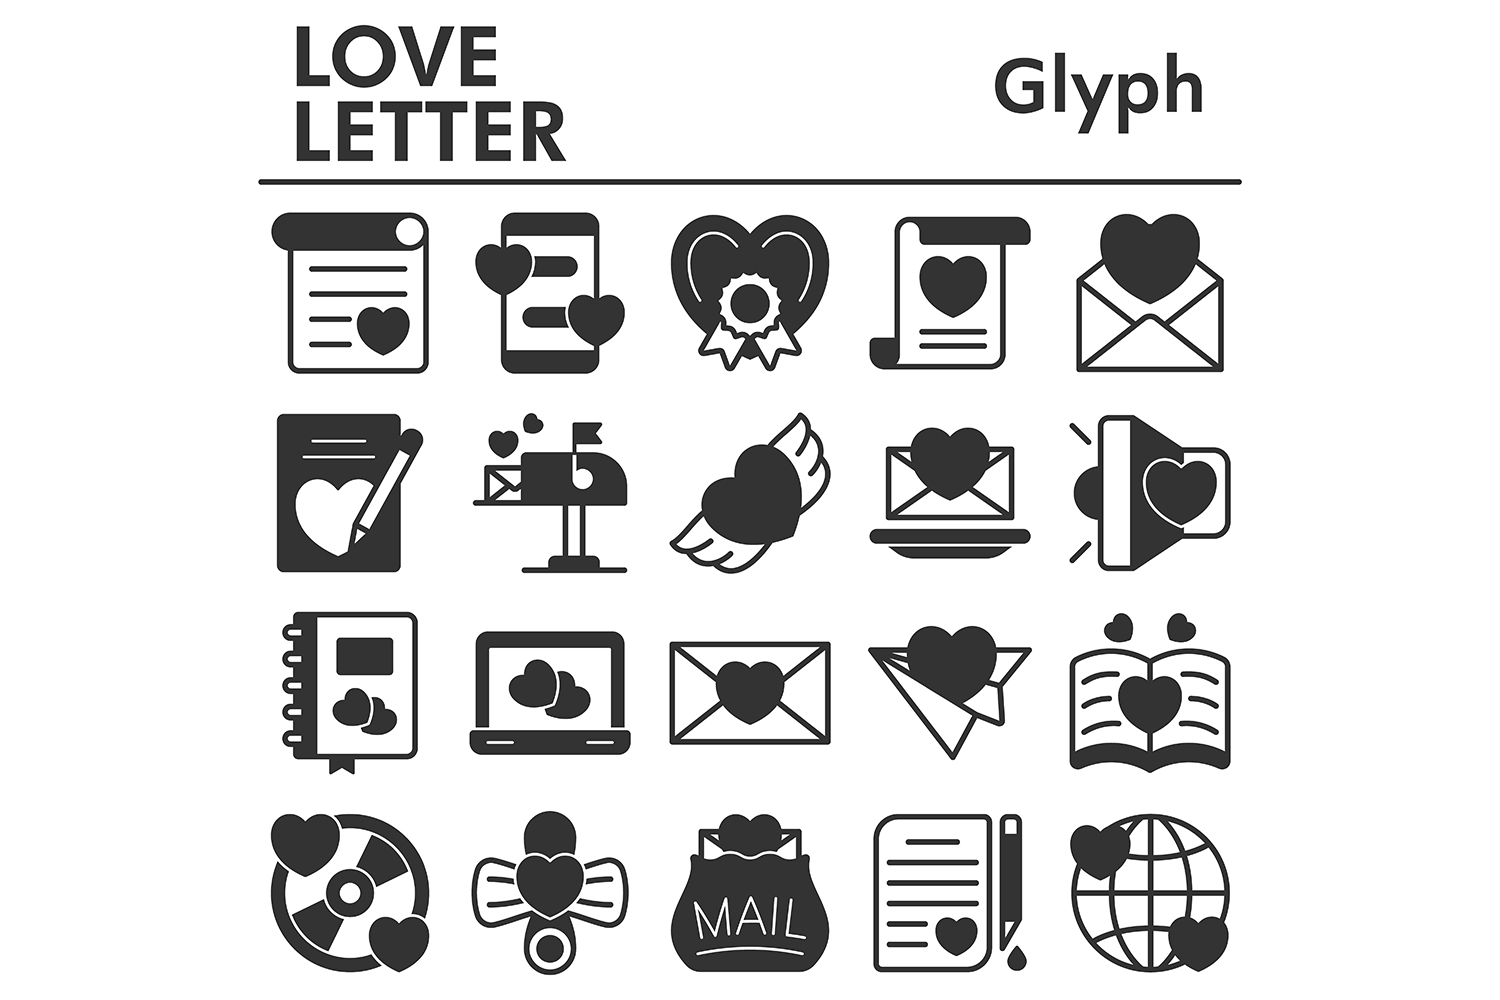 Love letter icons set_1 pinterest preview image.